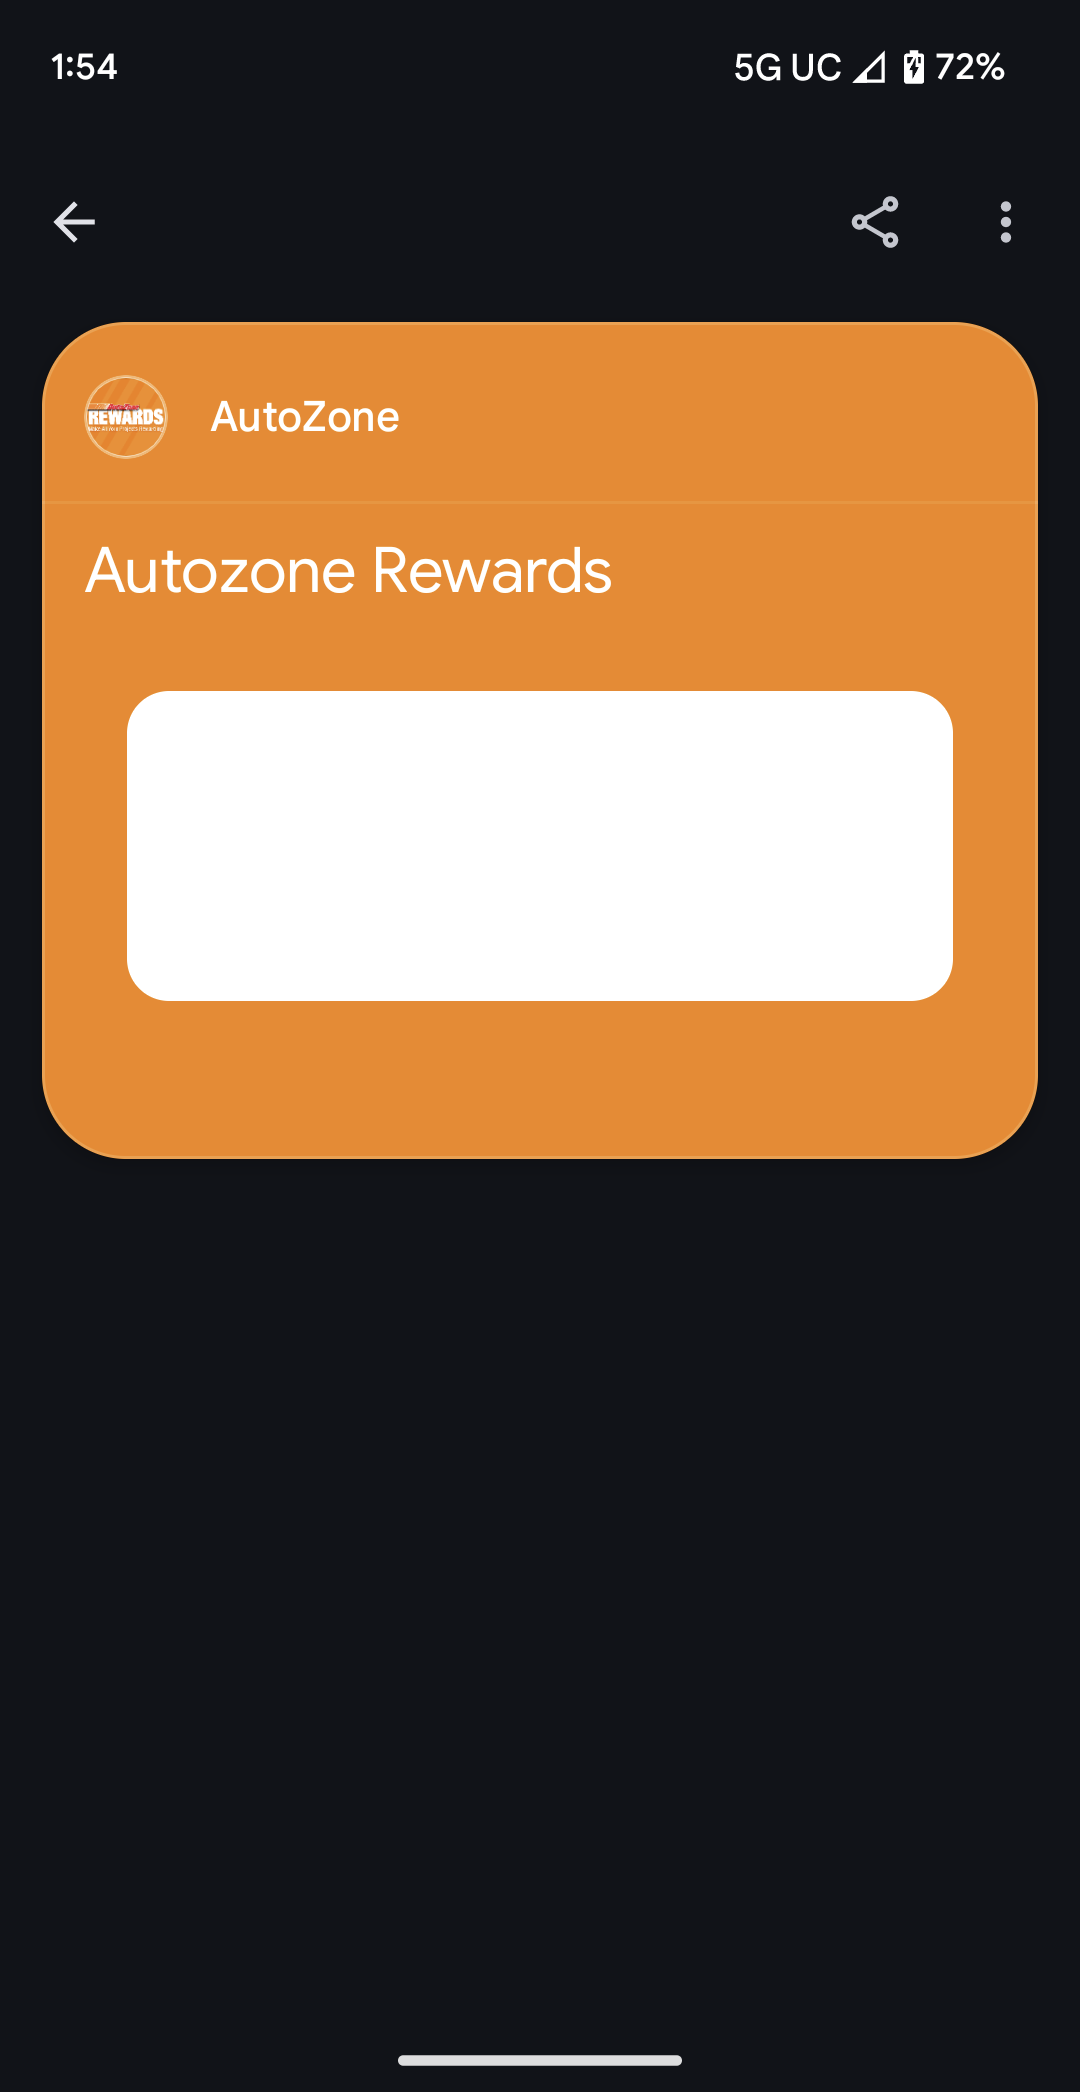 AutoZone supports adding its AutoZone rewards pass to Google Wallet.